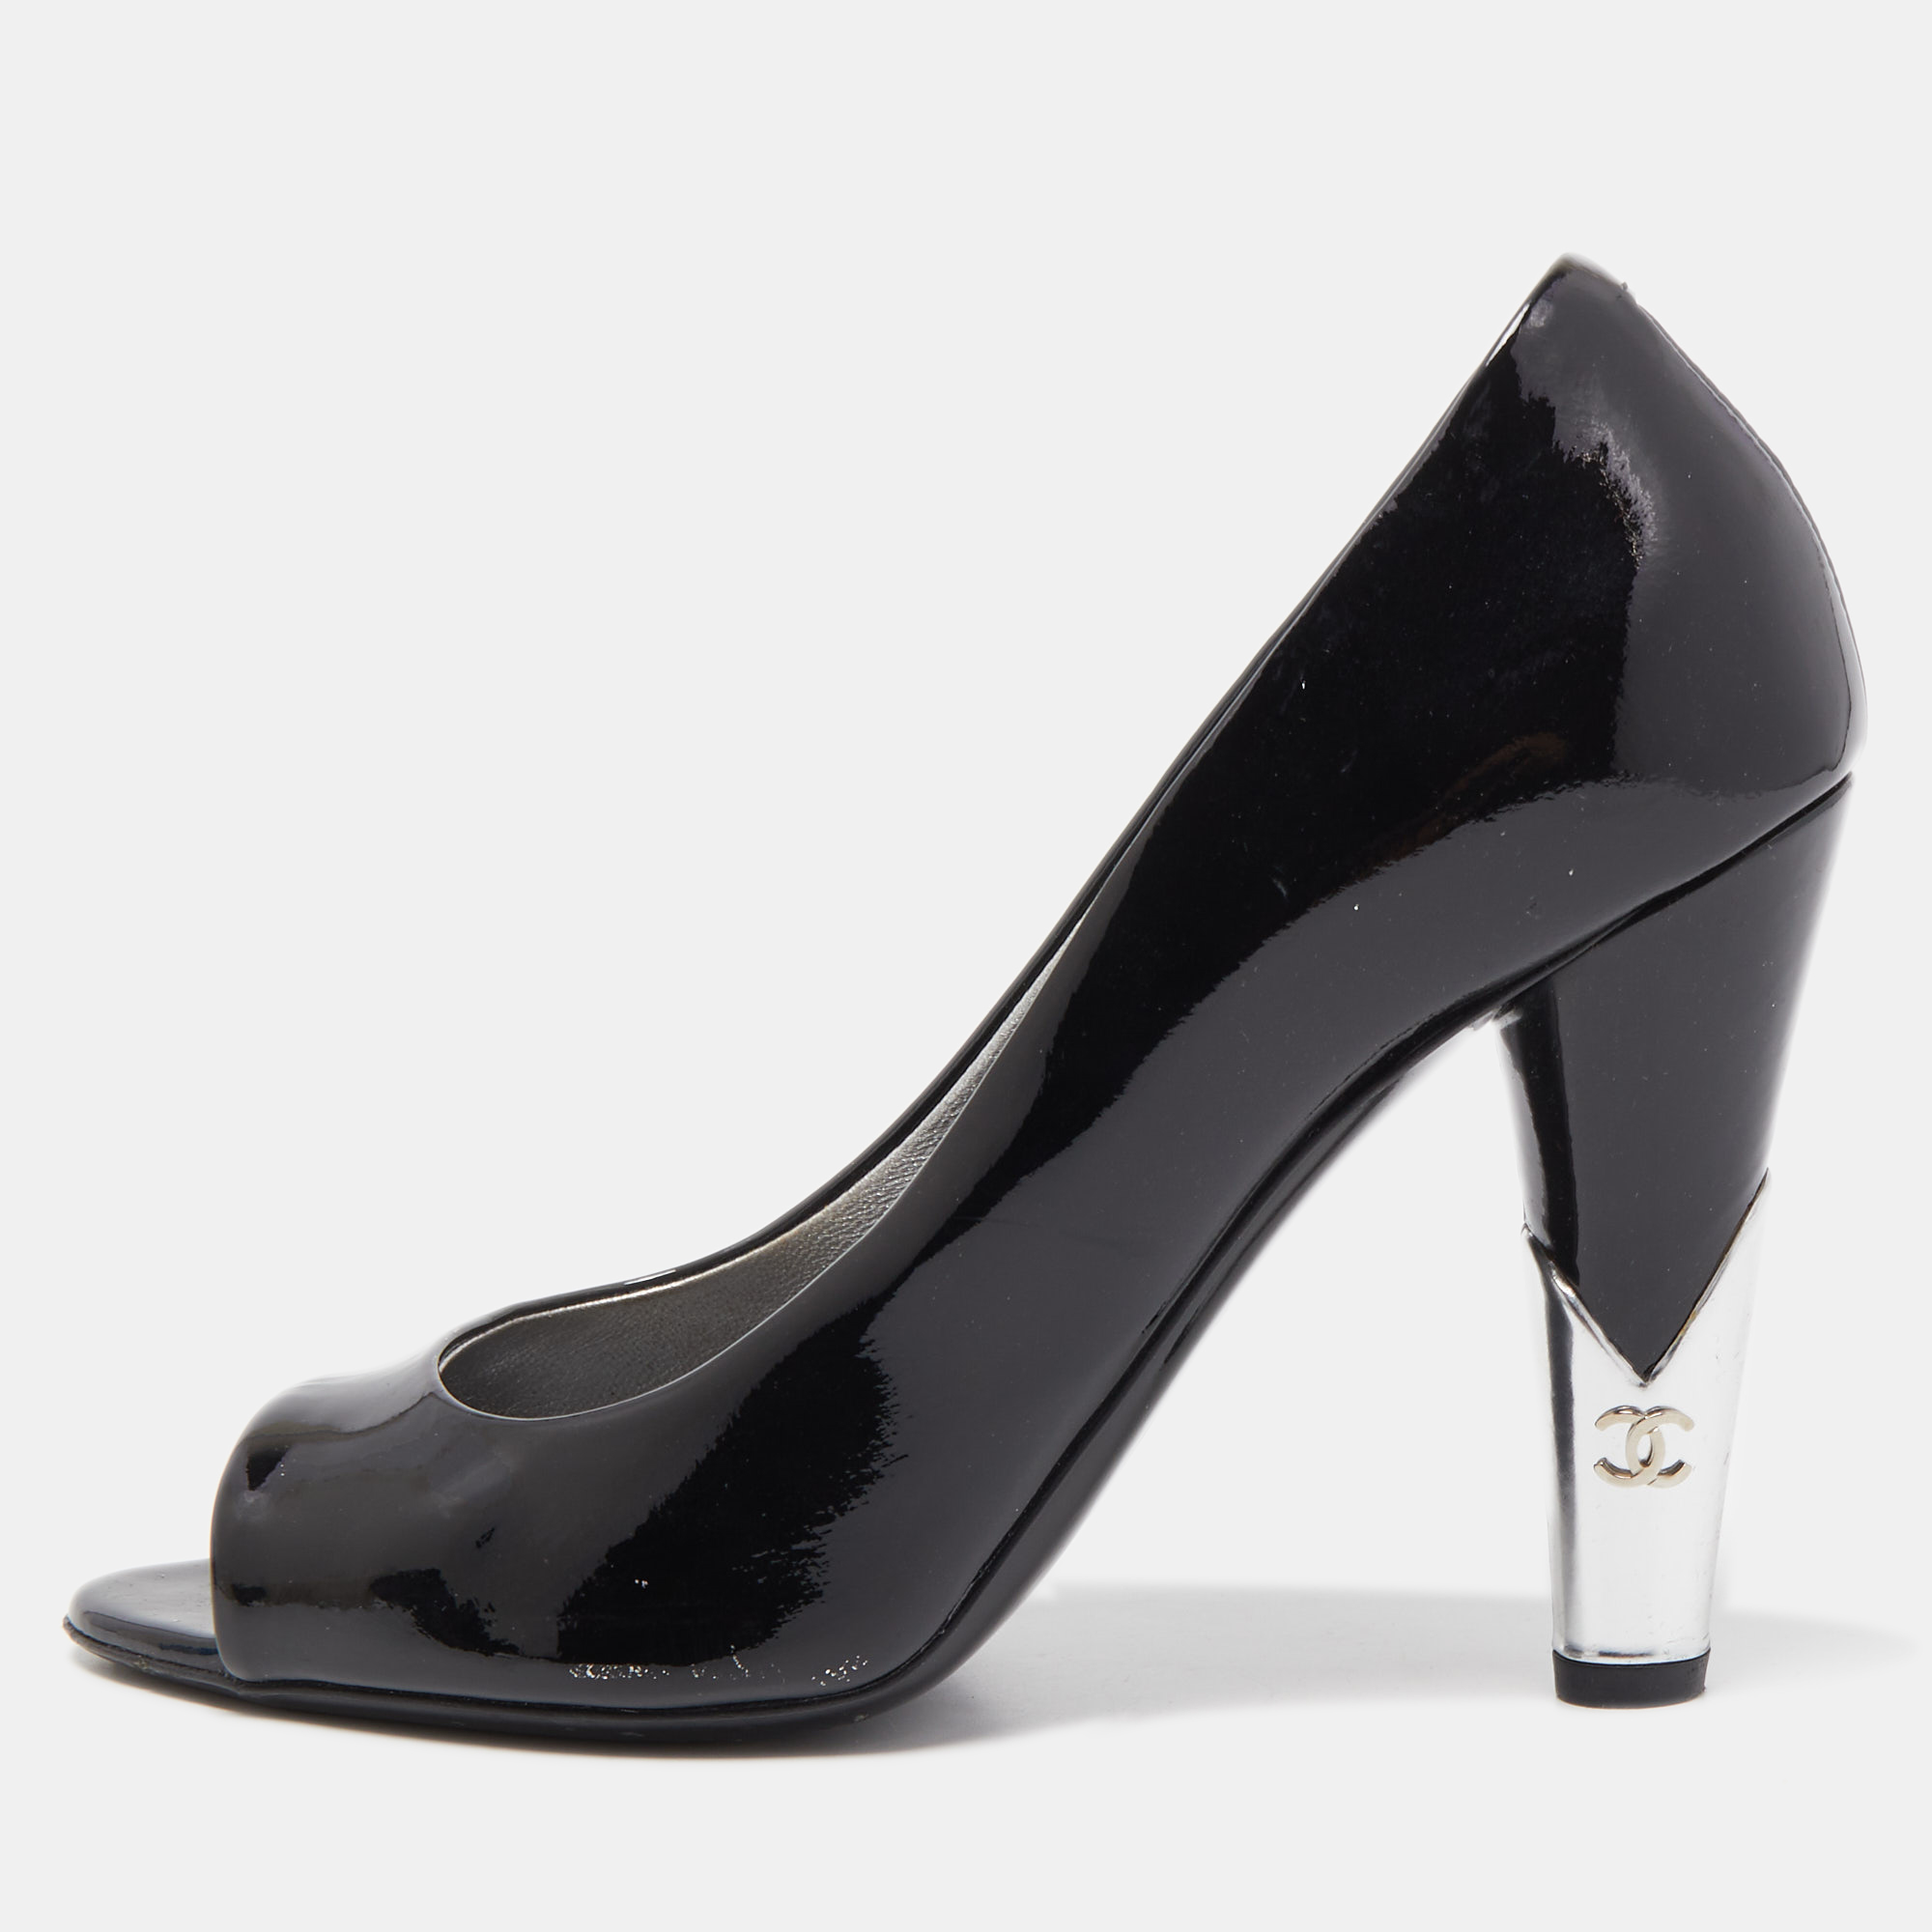 Chanel Black Patent Leather CC Peep Toe Pumps Size 36.5